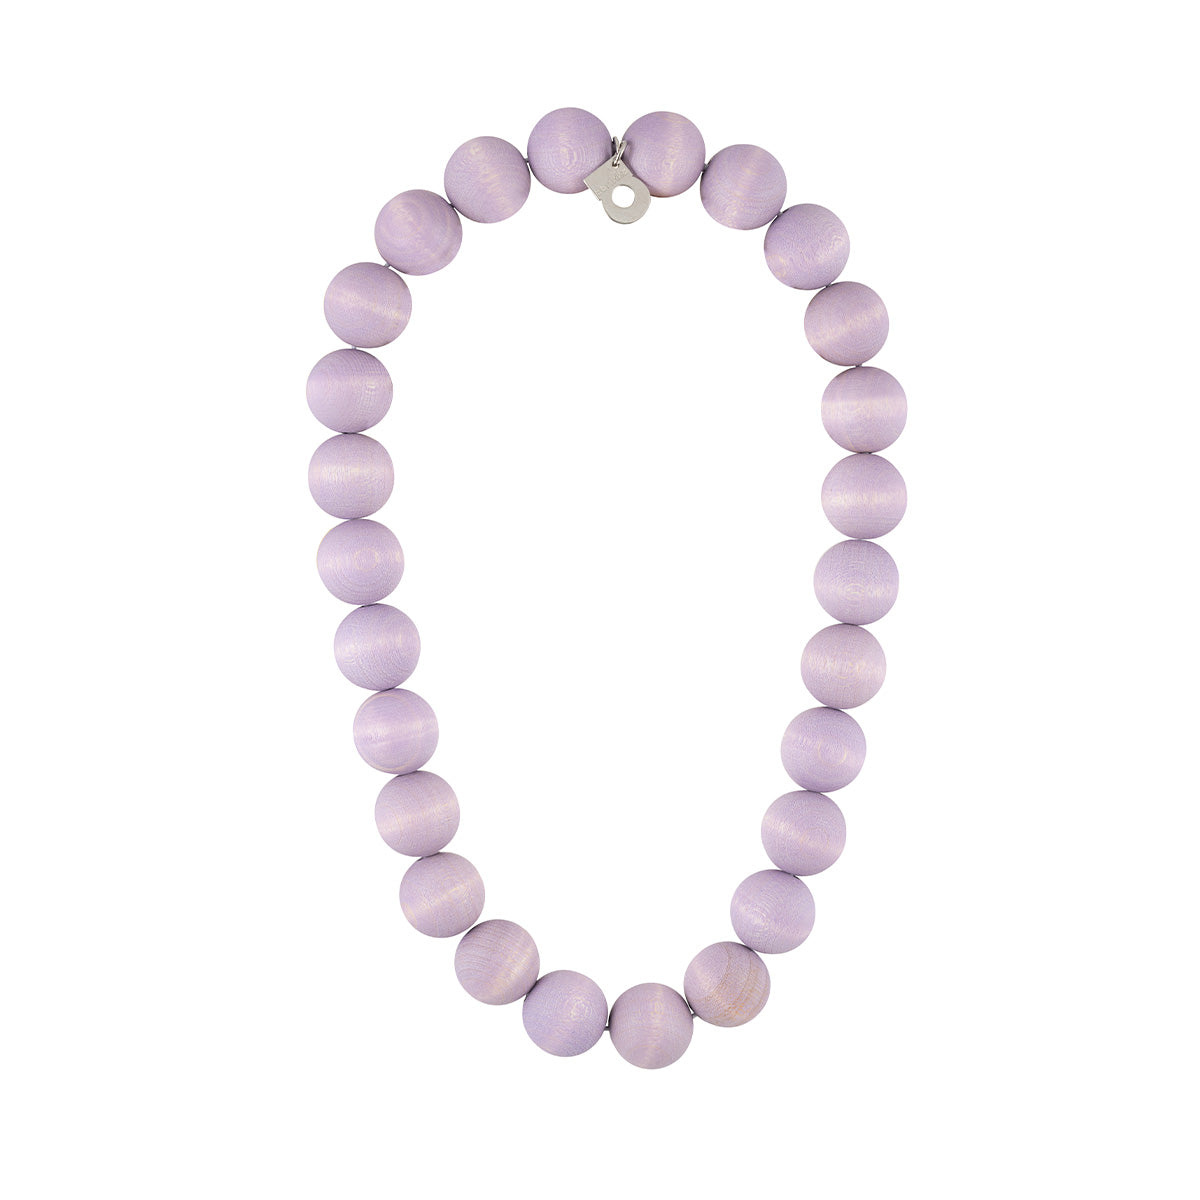 Suomi necklace, lavender